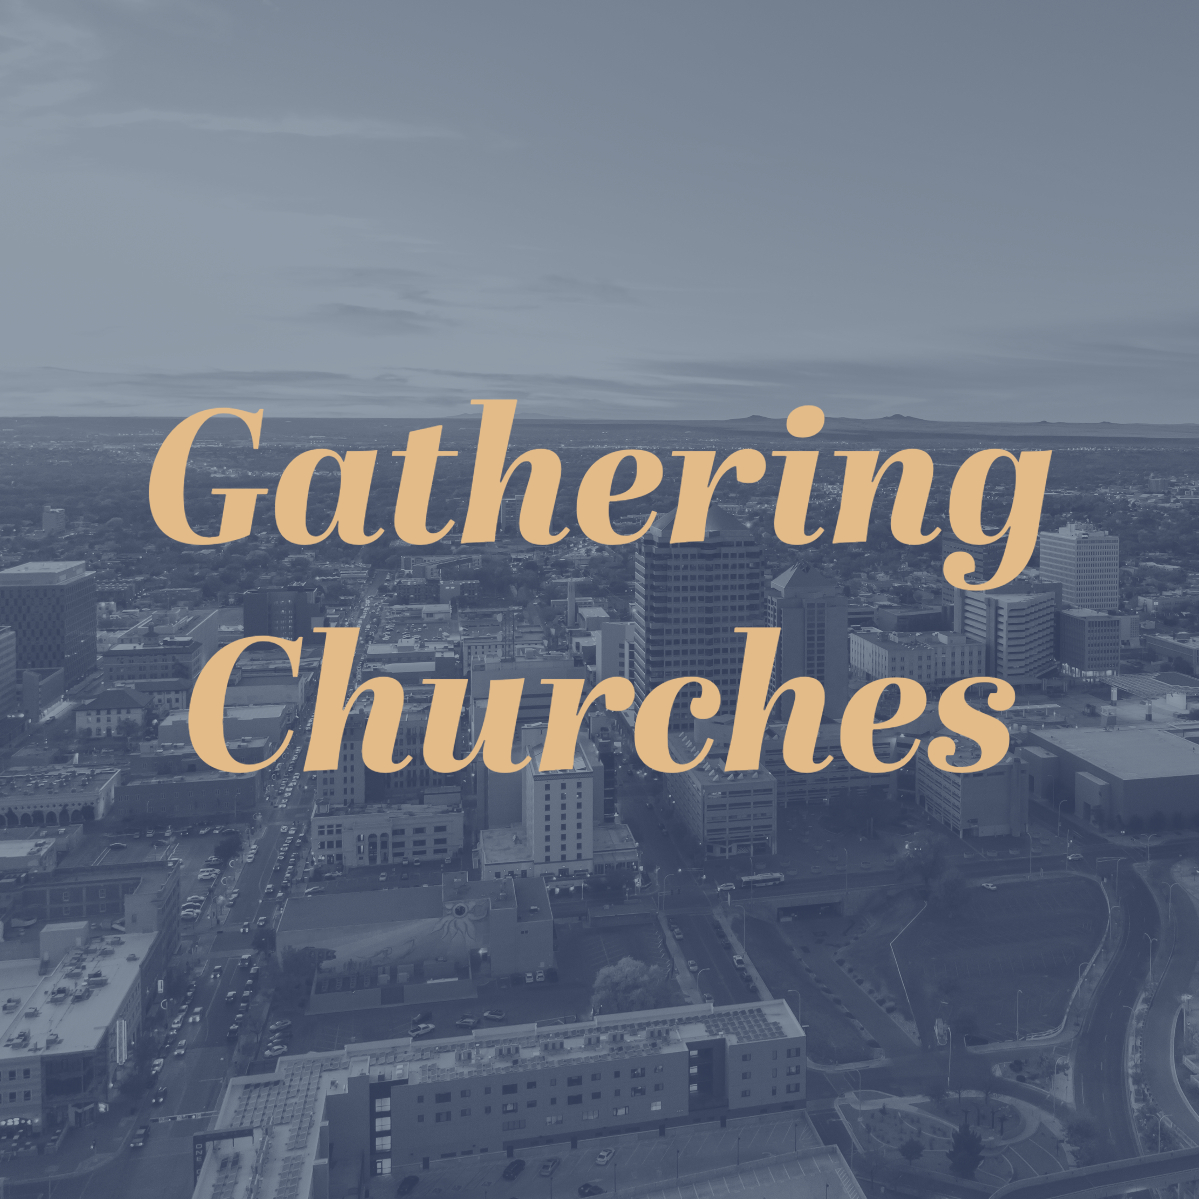 Gathering Churches (2)